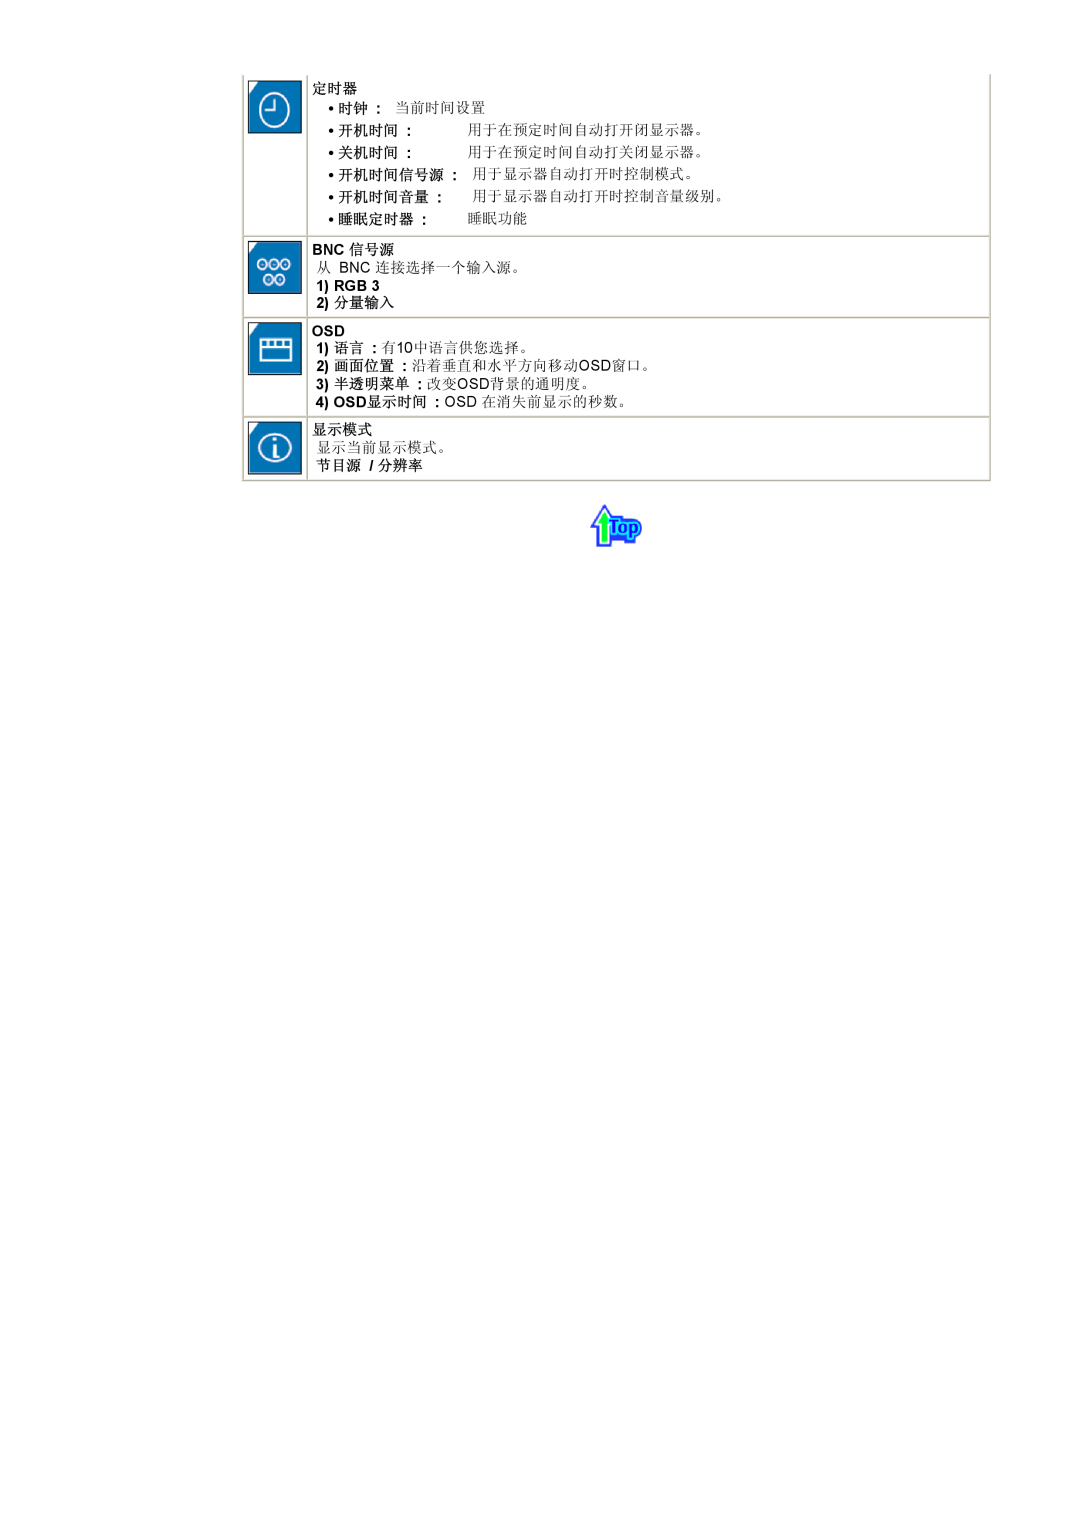 Samsung CK40PSNBG/EDC, CK40BSNS/EDC, CK40PSNS/EDC manual 睡眠定时器 睡眠功能, Bnc 信号源, 1 RGB, 2 分量输入, 显示模式, 节目源 / 分辨率 